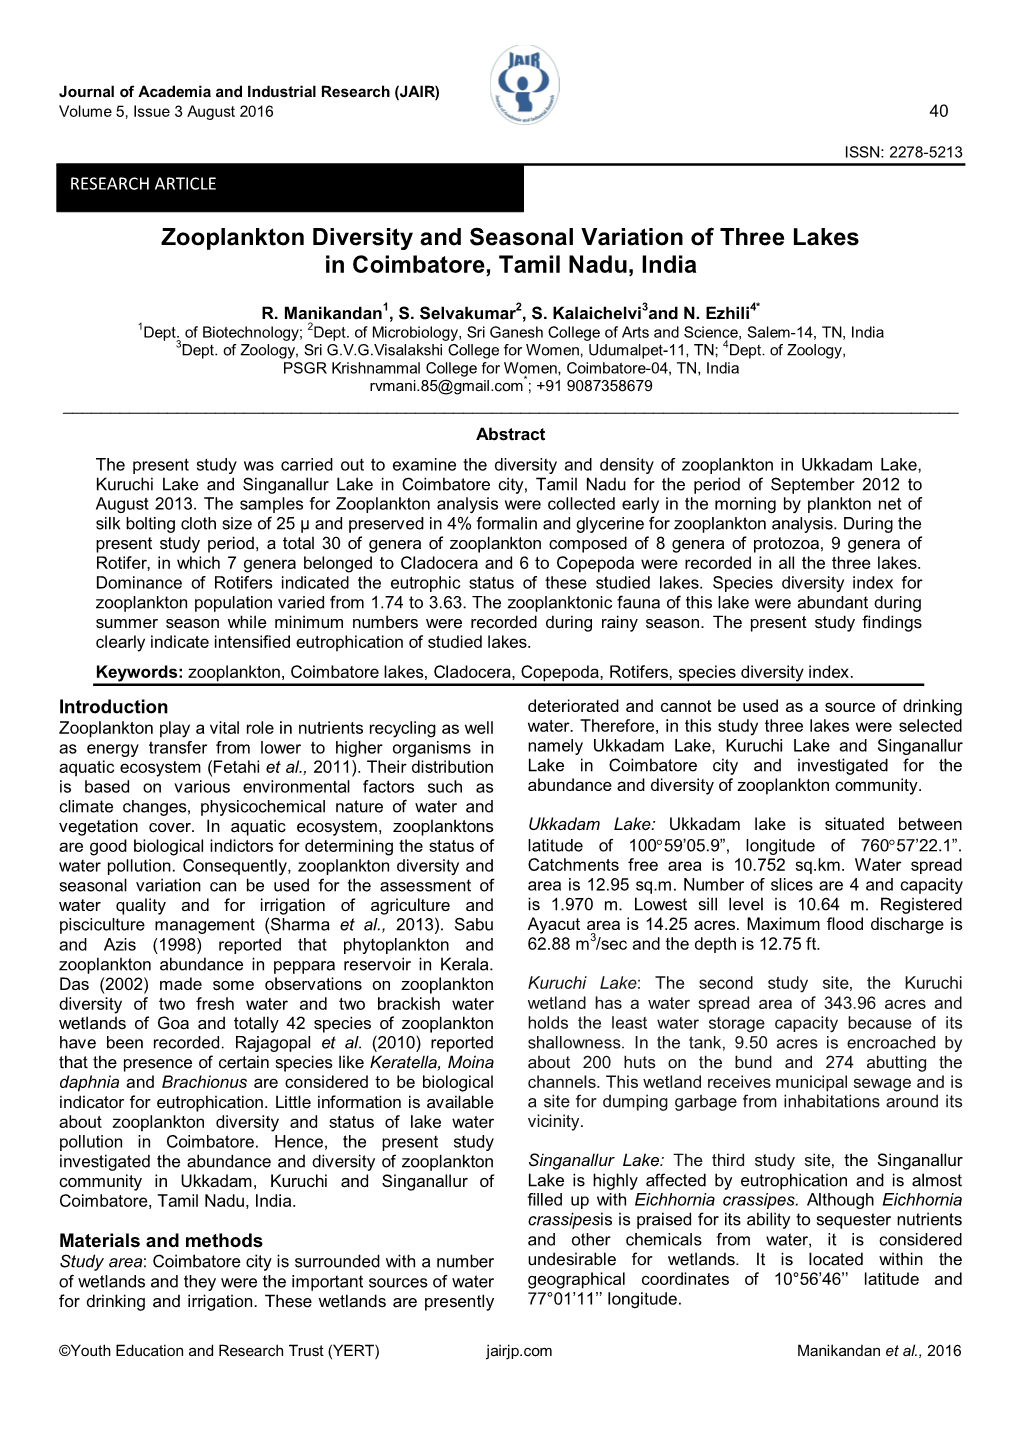 Zooplankton Diversity and Seasonal Variation of Three Lakes in Coimbatore, Tamil Nadu, India